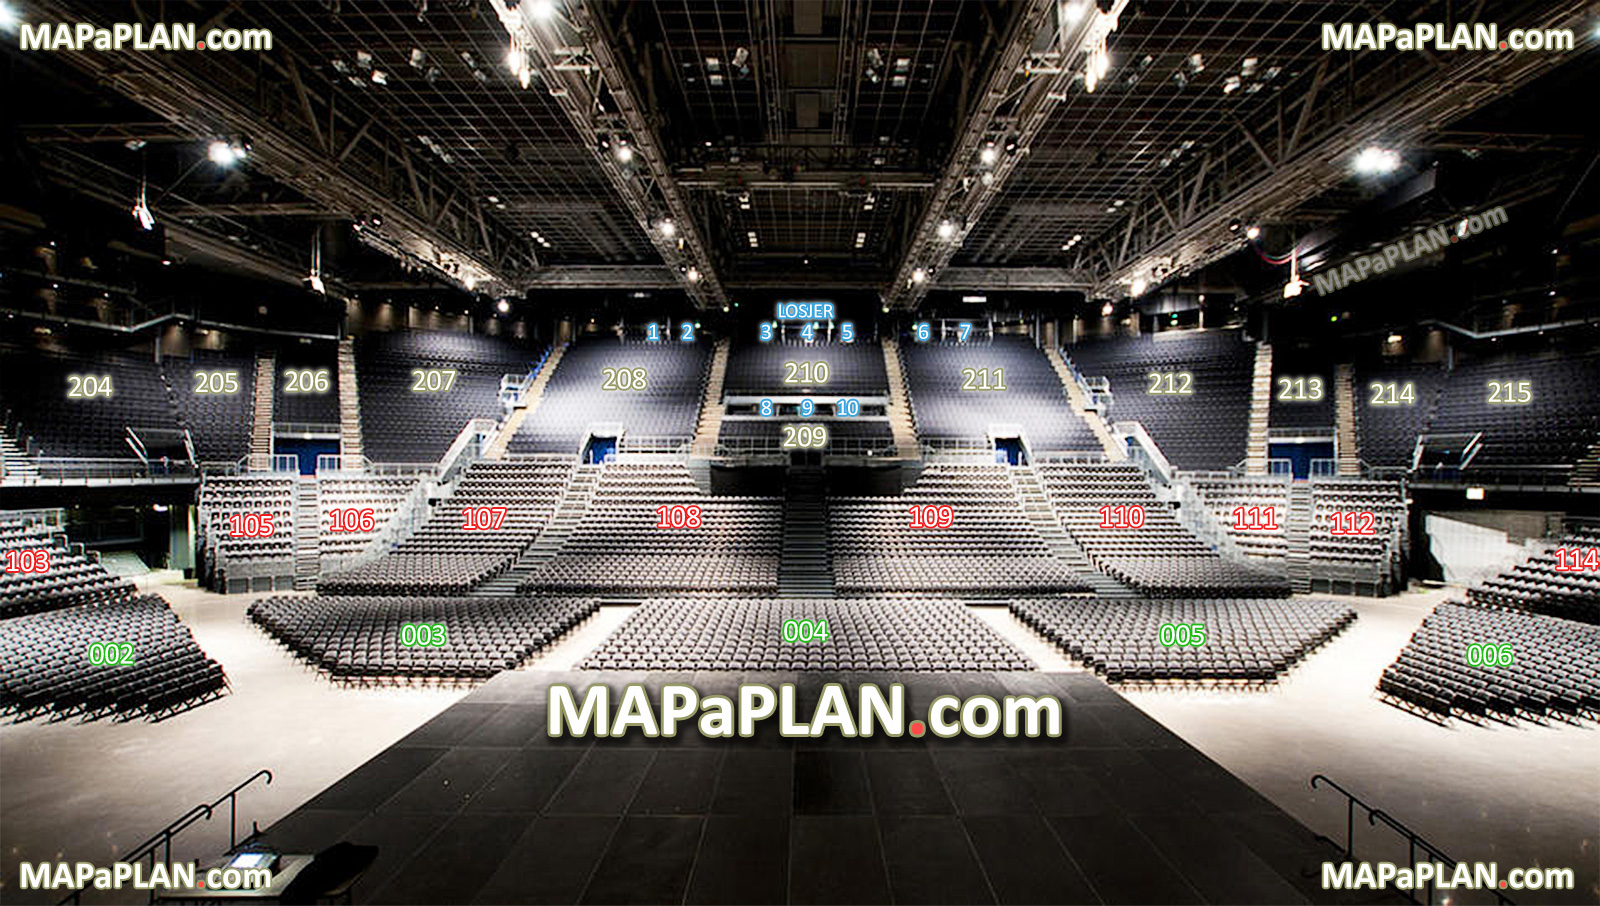 innsiden panorama oversiktskart felt 002 003 004 005 006 103 105 106 107 108 109 110 111 112 114 vip losjer sal kart inside view Oslo Spektrum Arena seating plan